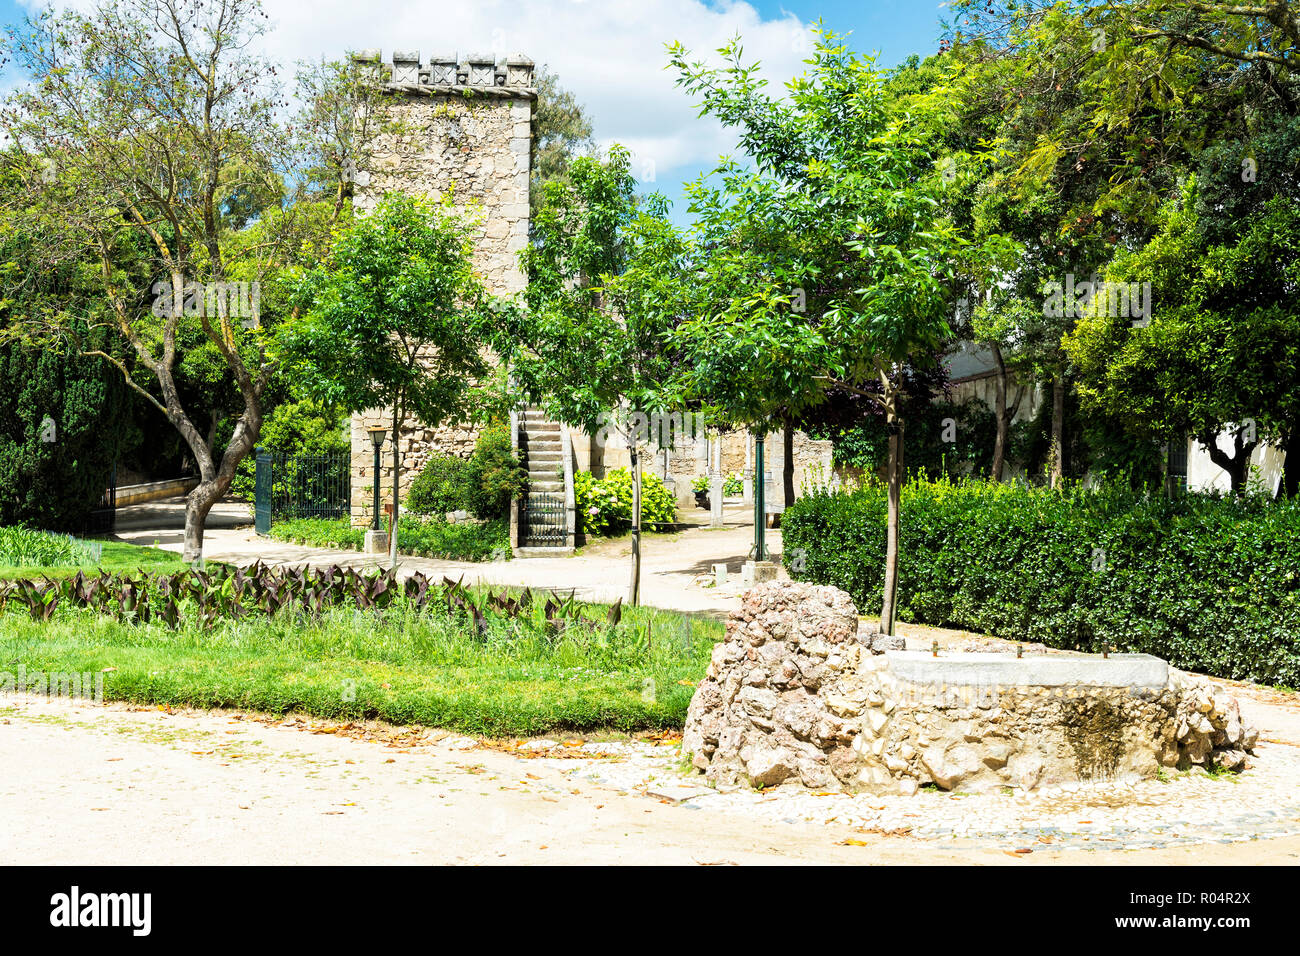 Ruinas fingidas, Don Manuel Royal Palace e giardino pubblico Merendas, Sito Patrimonio Mondiale dell'UNESCO, Evora, Alentejo, Portogallo, Europa Foto Stock